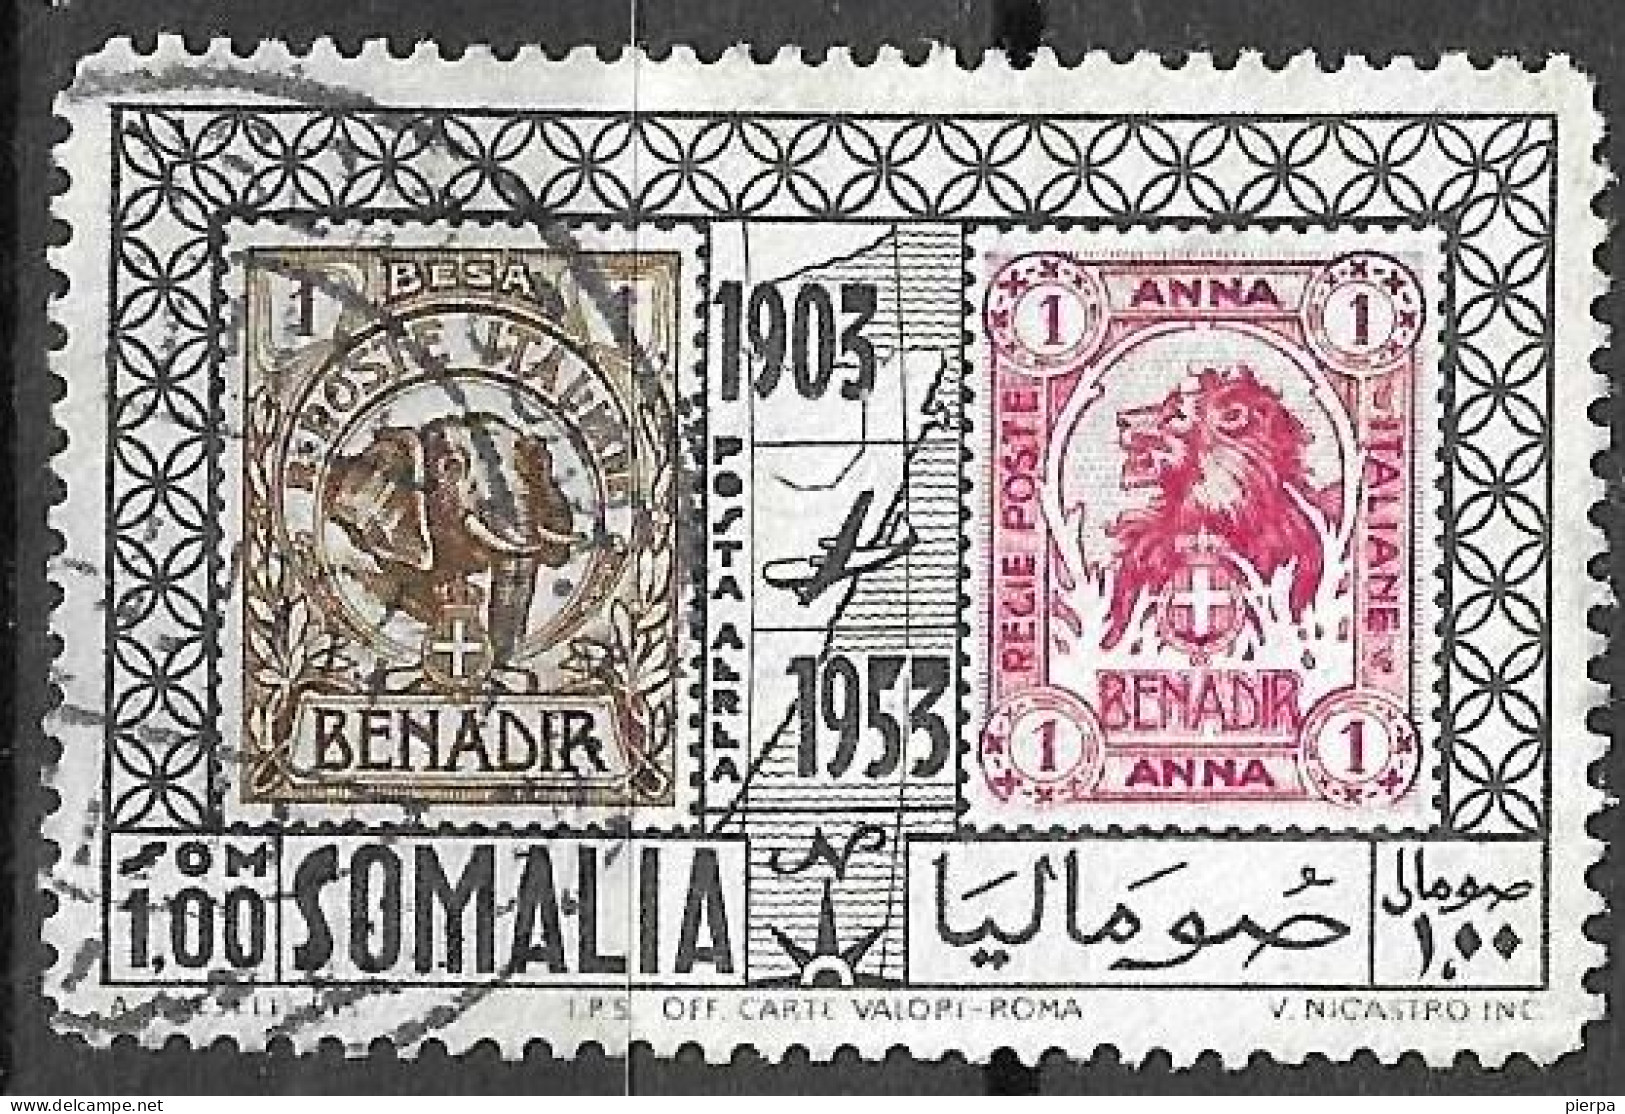 SOMALIA A.F.I.S. - 1953 - POSTA AEREA -50° FRANCOBOLLO - SOMALI 1,00 - USATO (YVERT AV 46 - MICHEL 287 - SS A 19) - Somalië (AFIS)